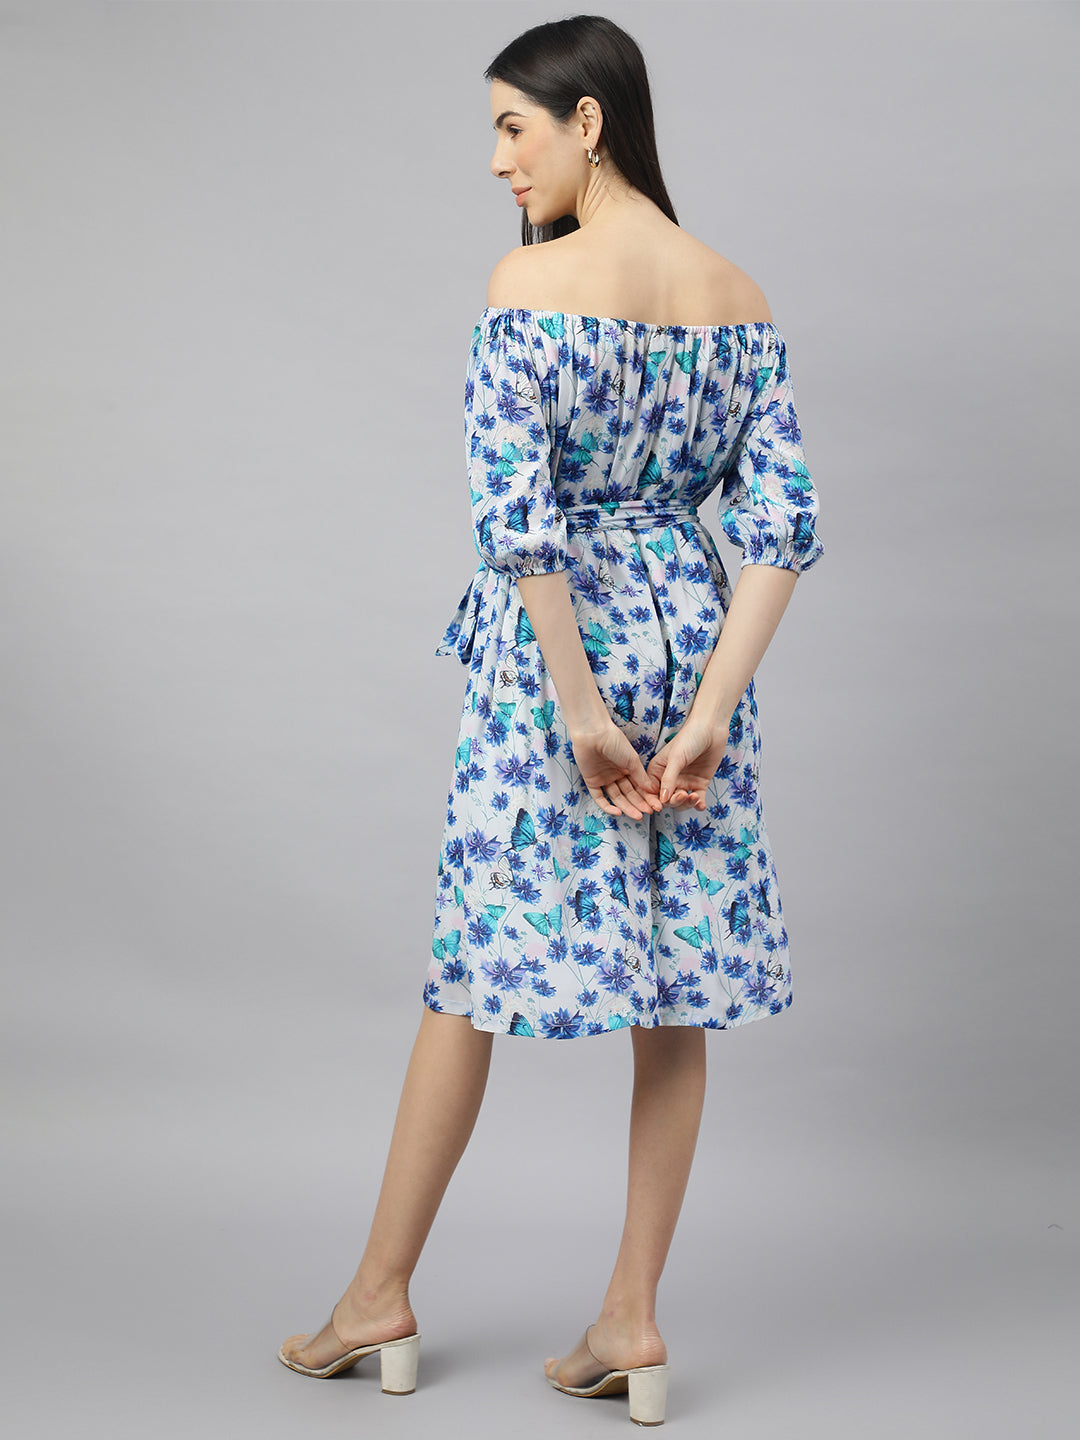 Valbone Women’s Blue Georgette Floral Print Dress